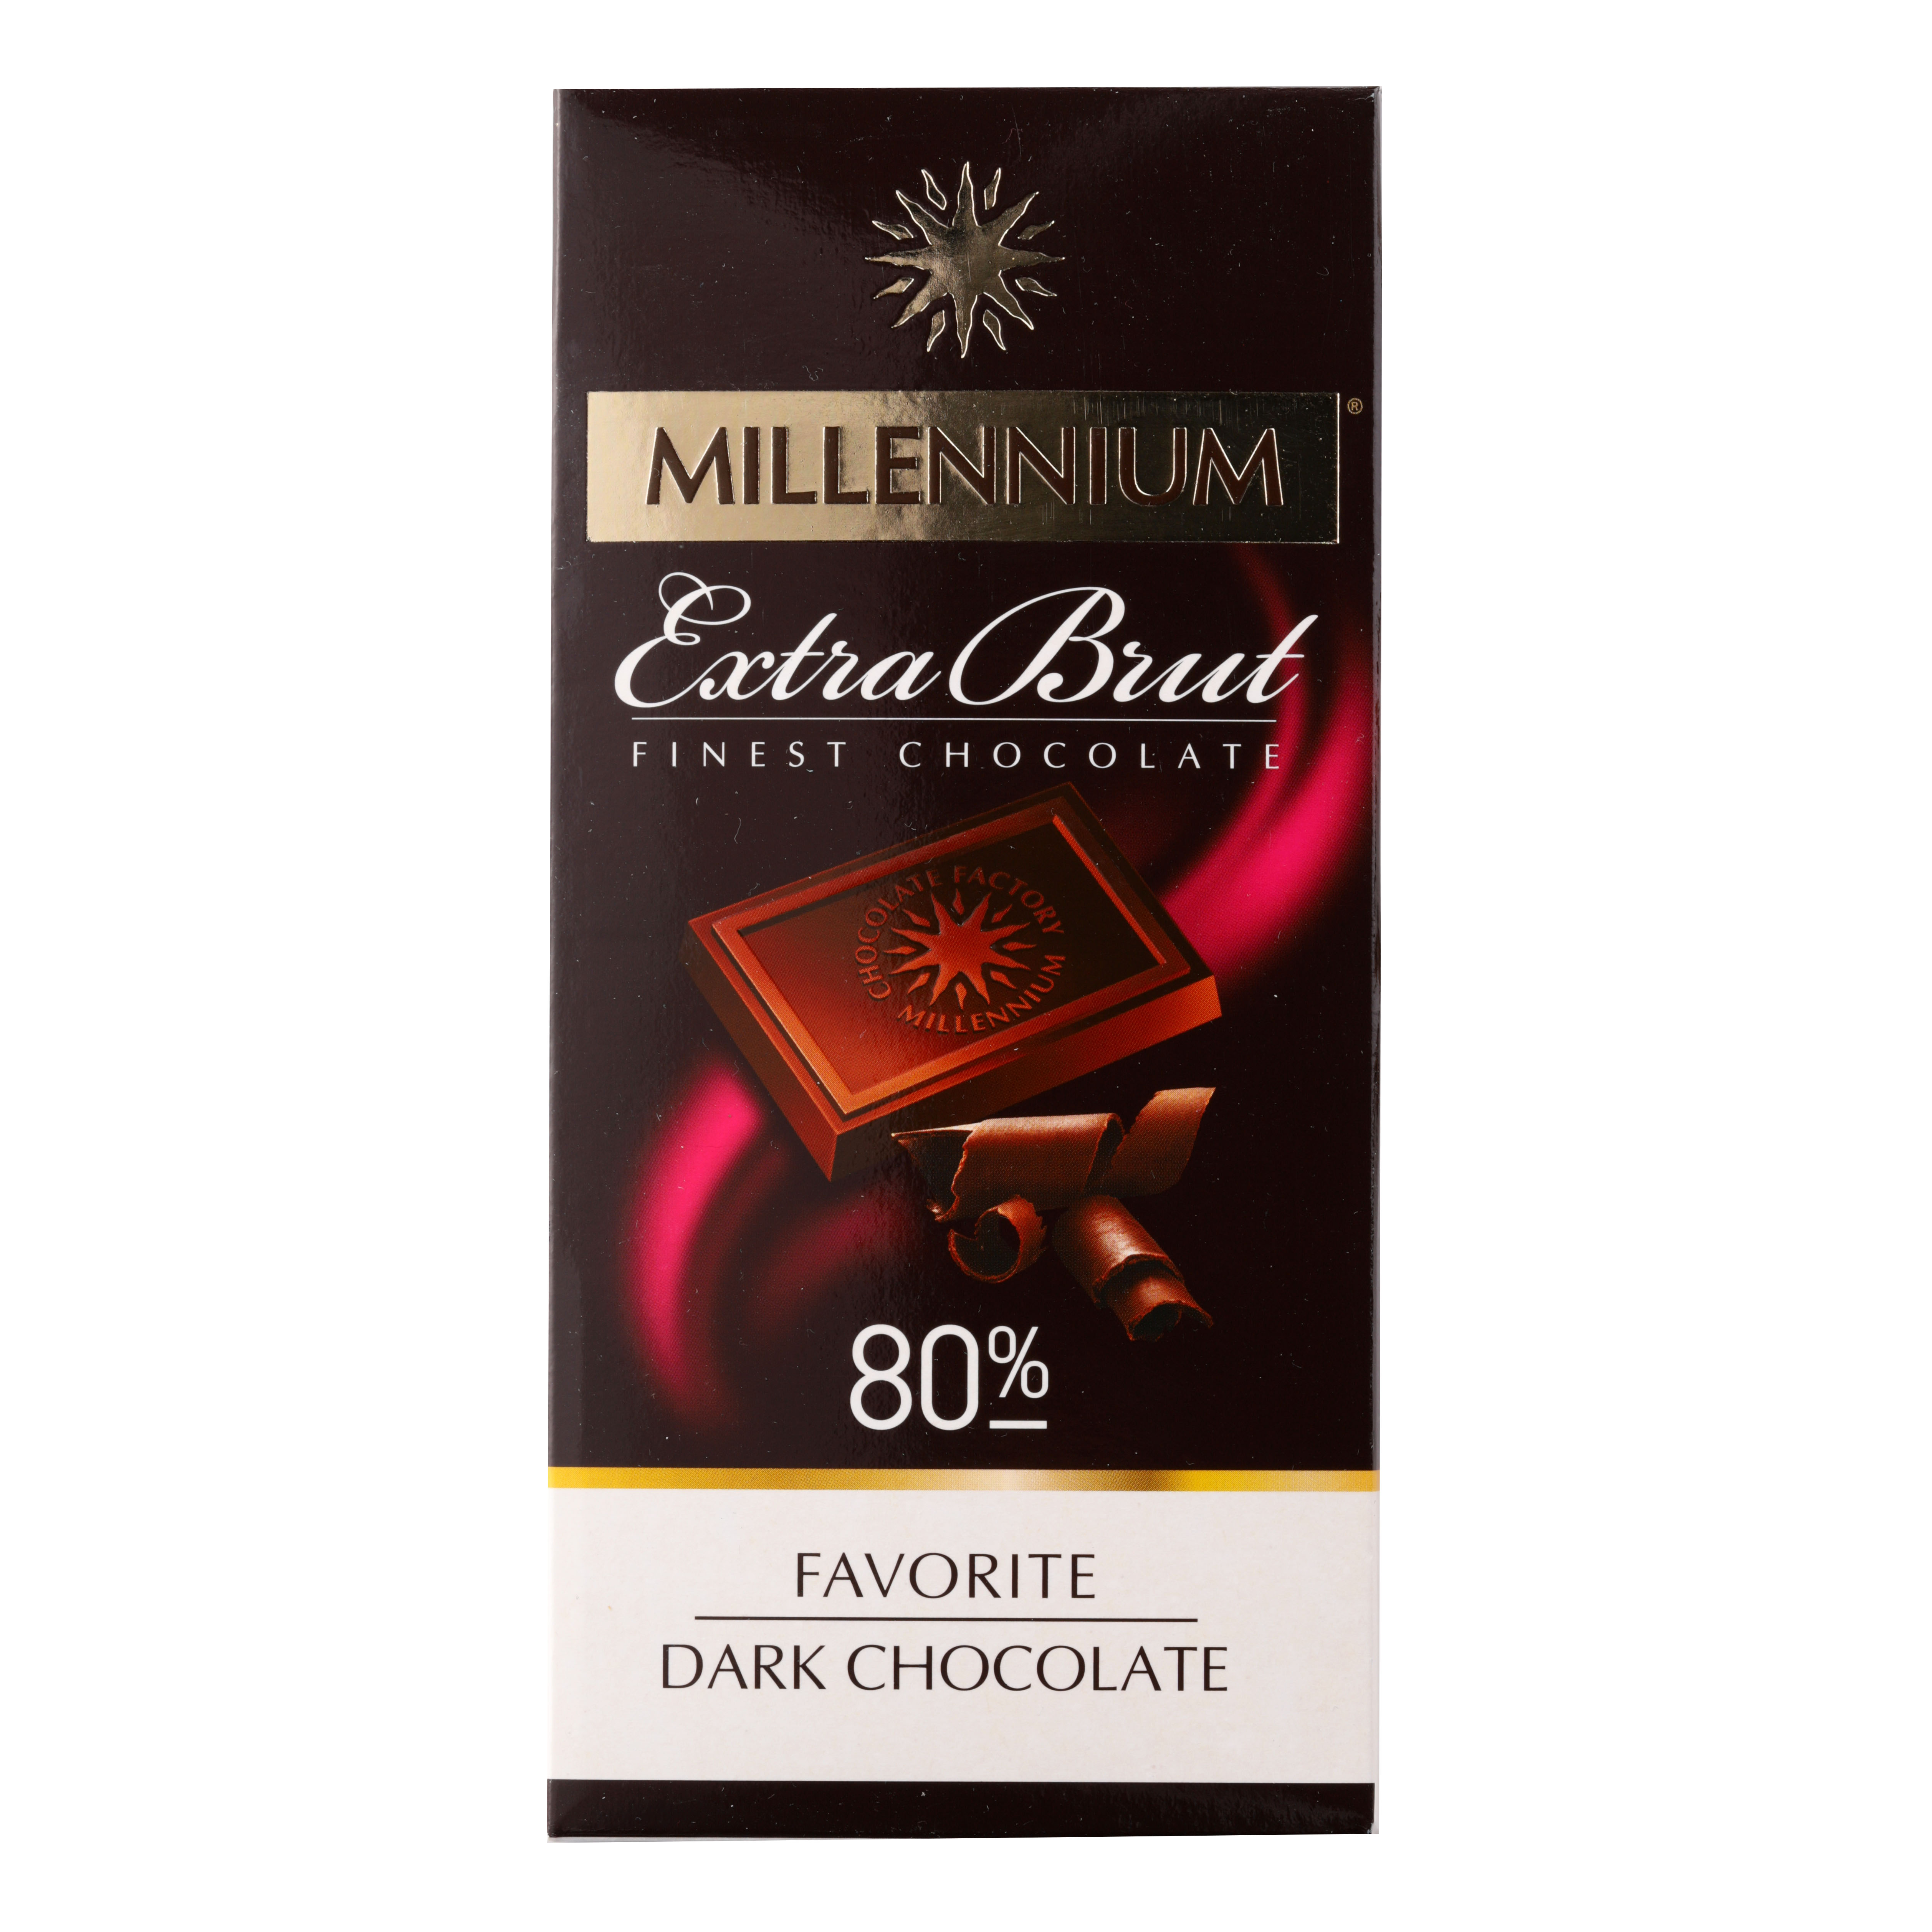 Шоколад Millennium Favorite Extra Brut чорний 80% 100г